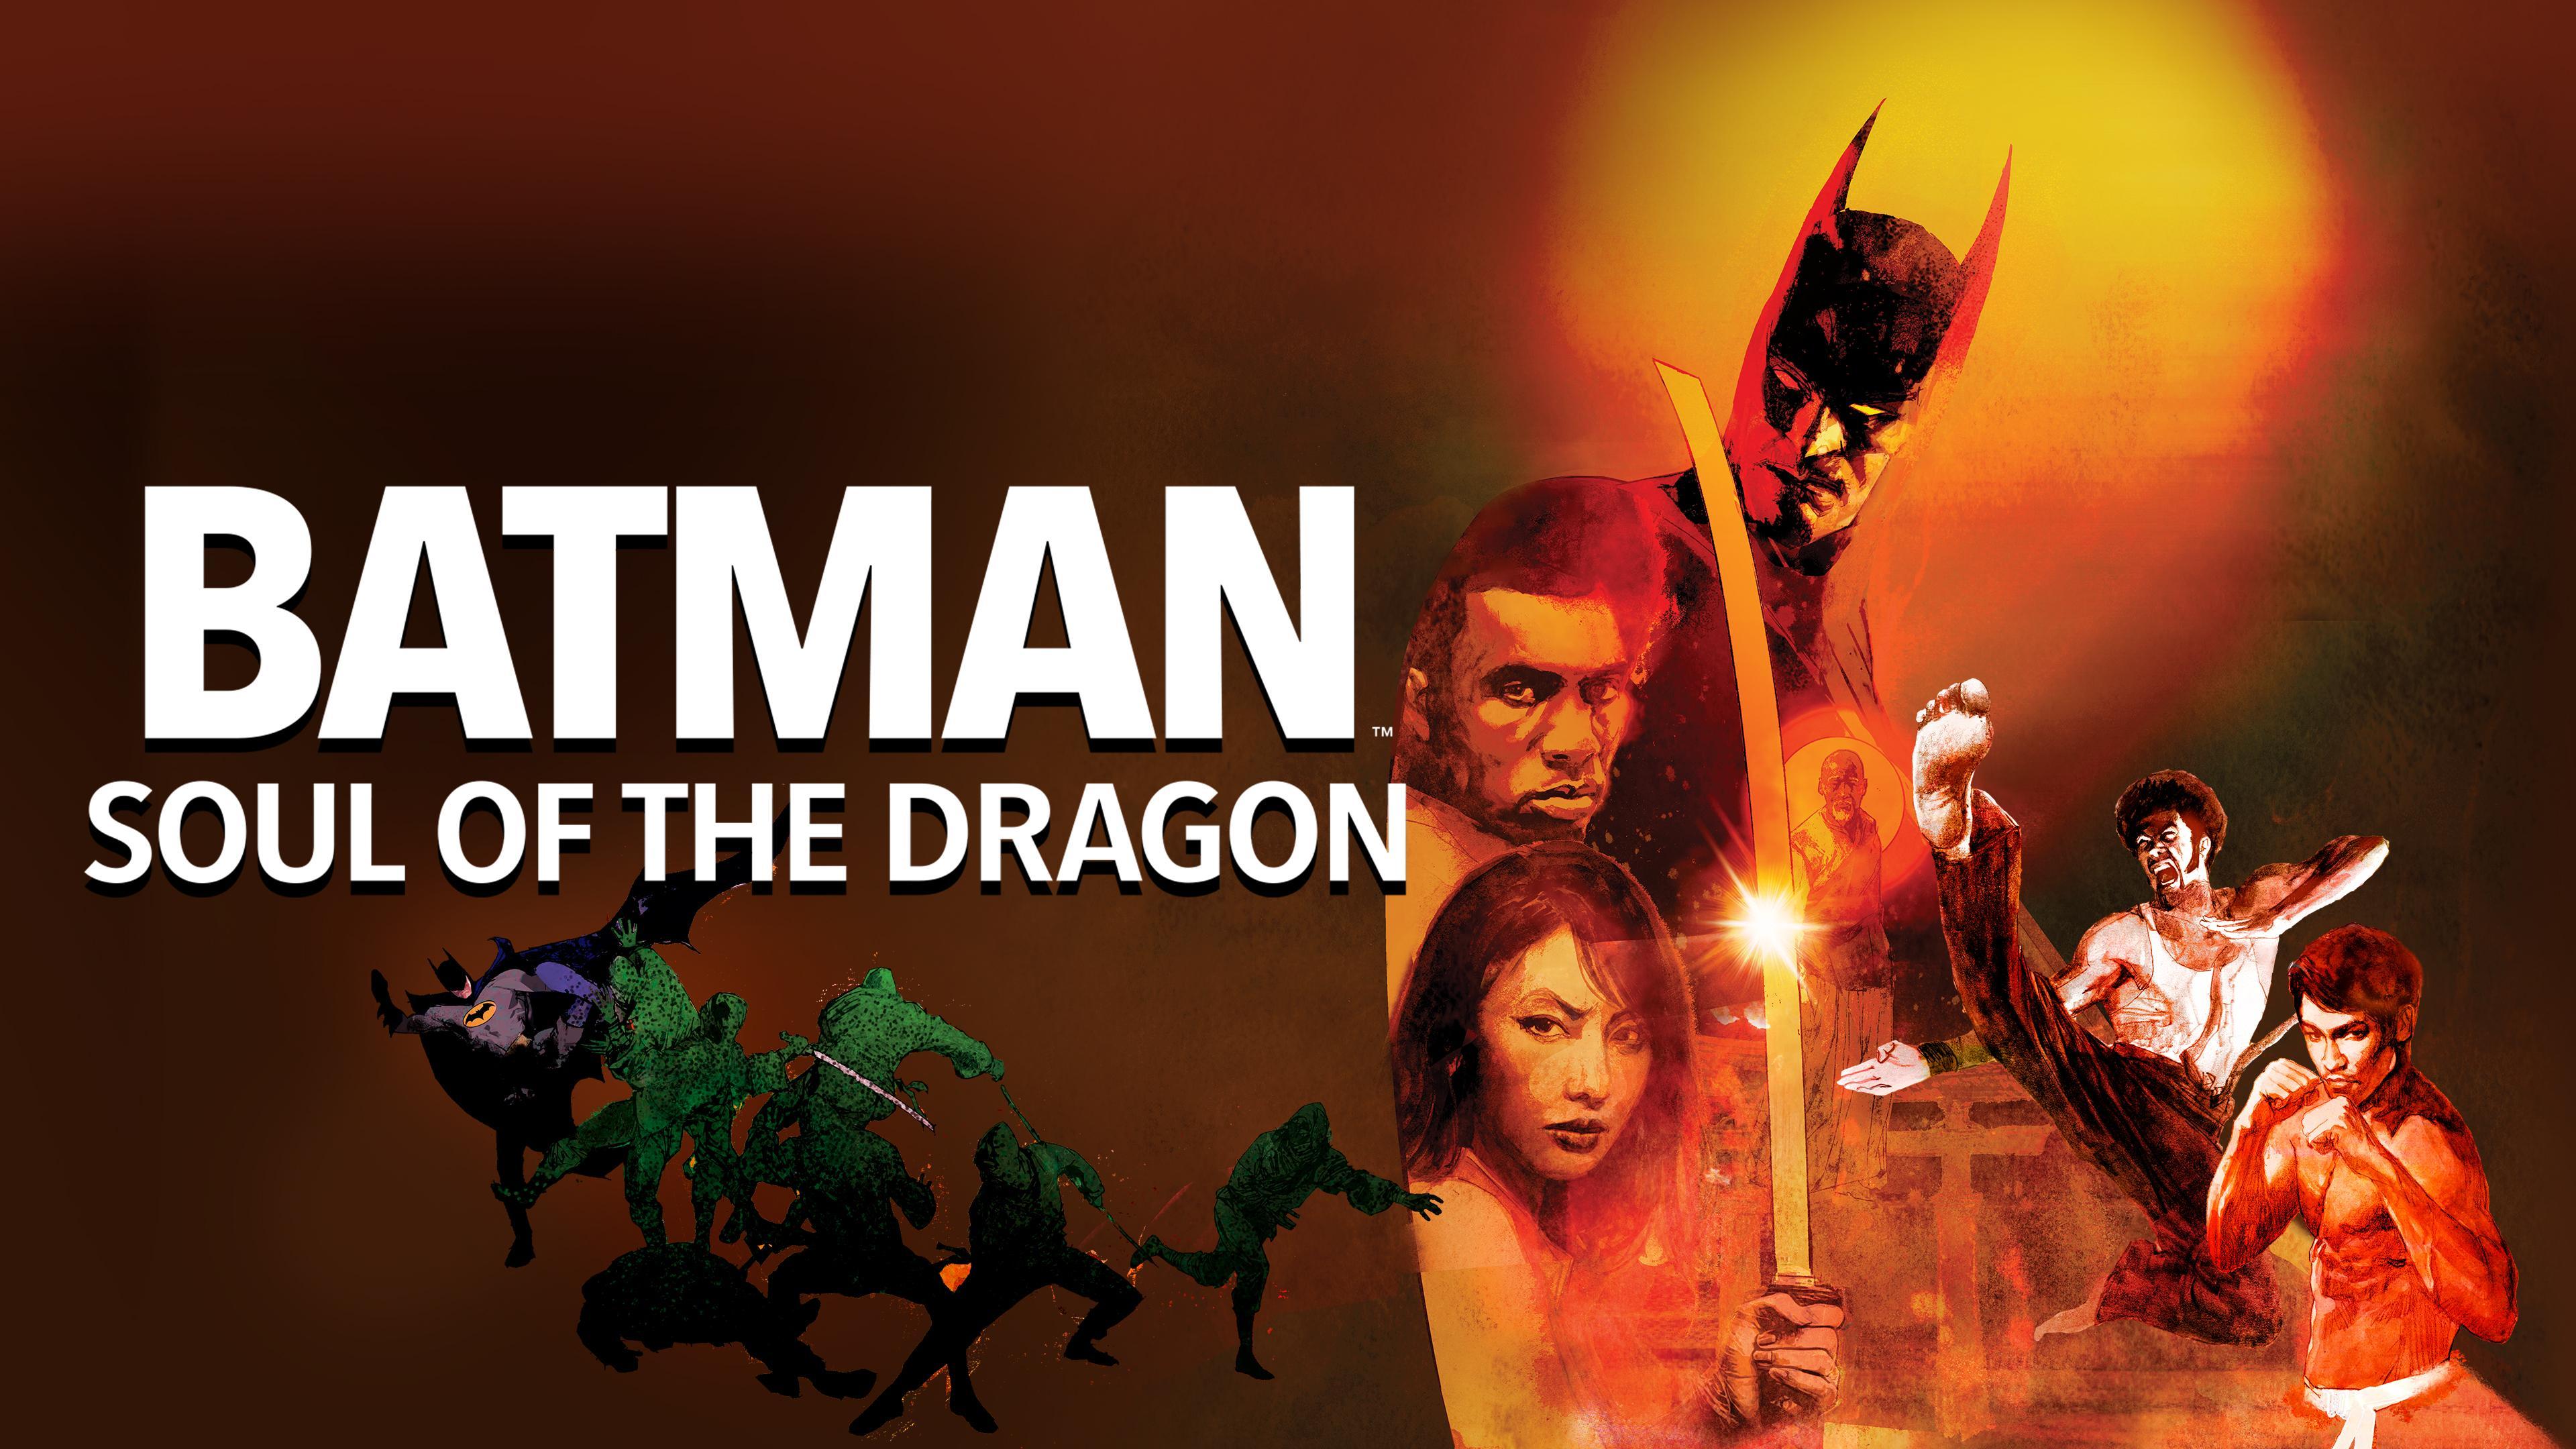 JUSTICE SOCIETY World War II & BATMAN Soul of The Dragon 4K Ultra HD + More  883929729142